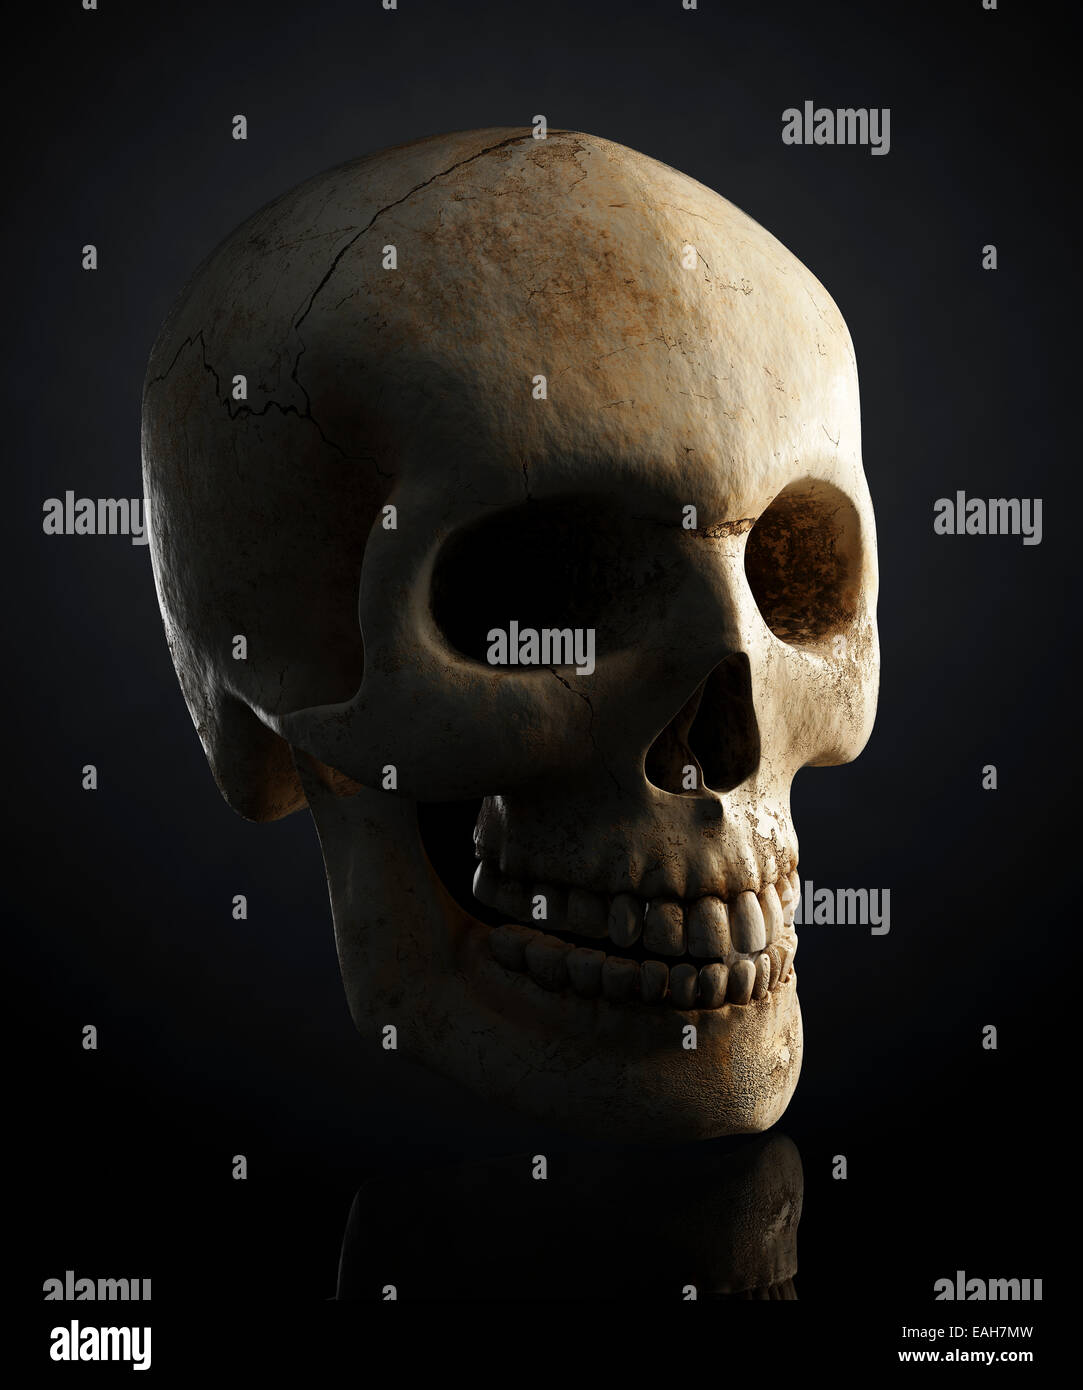 Human skull still life on black background - 3D artwork Stock Photo